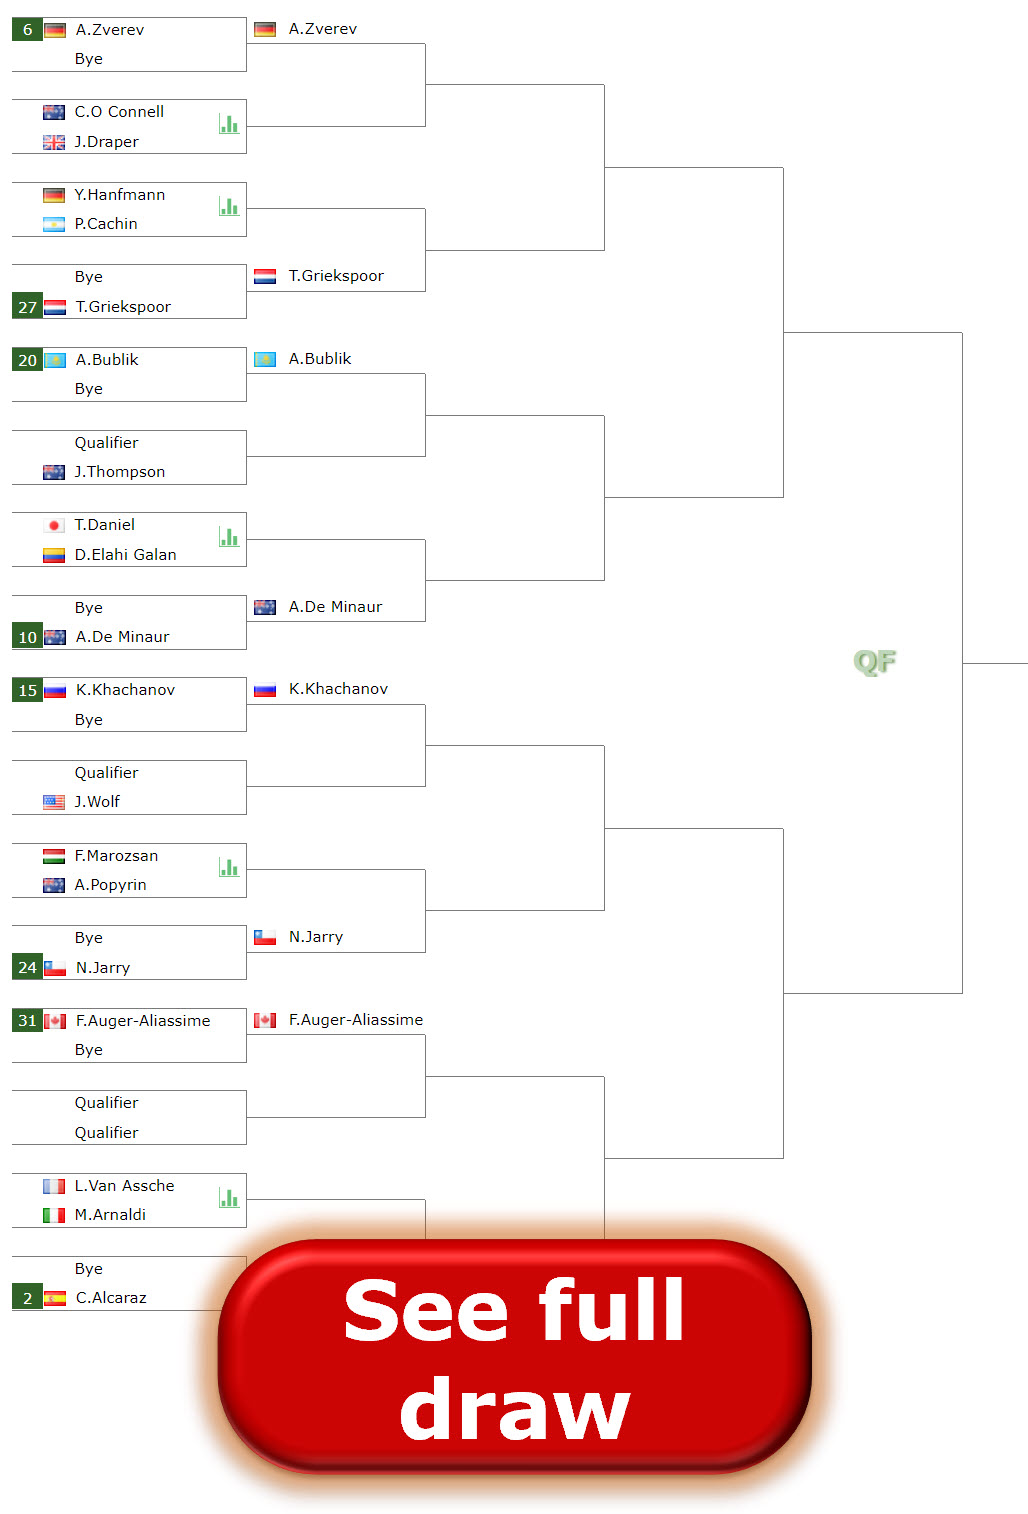 ATP INDIAN WELLS. Djokovic, Alcaraz, Sinner, Medvedev lead the draw